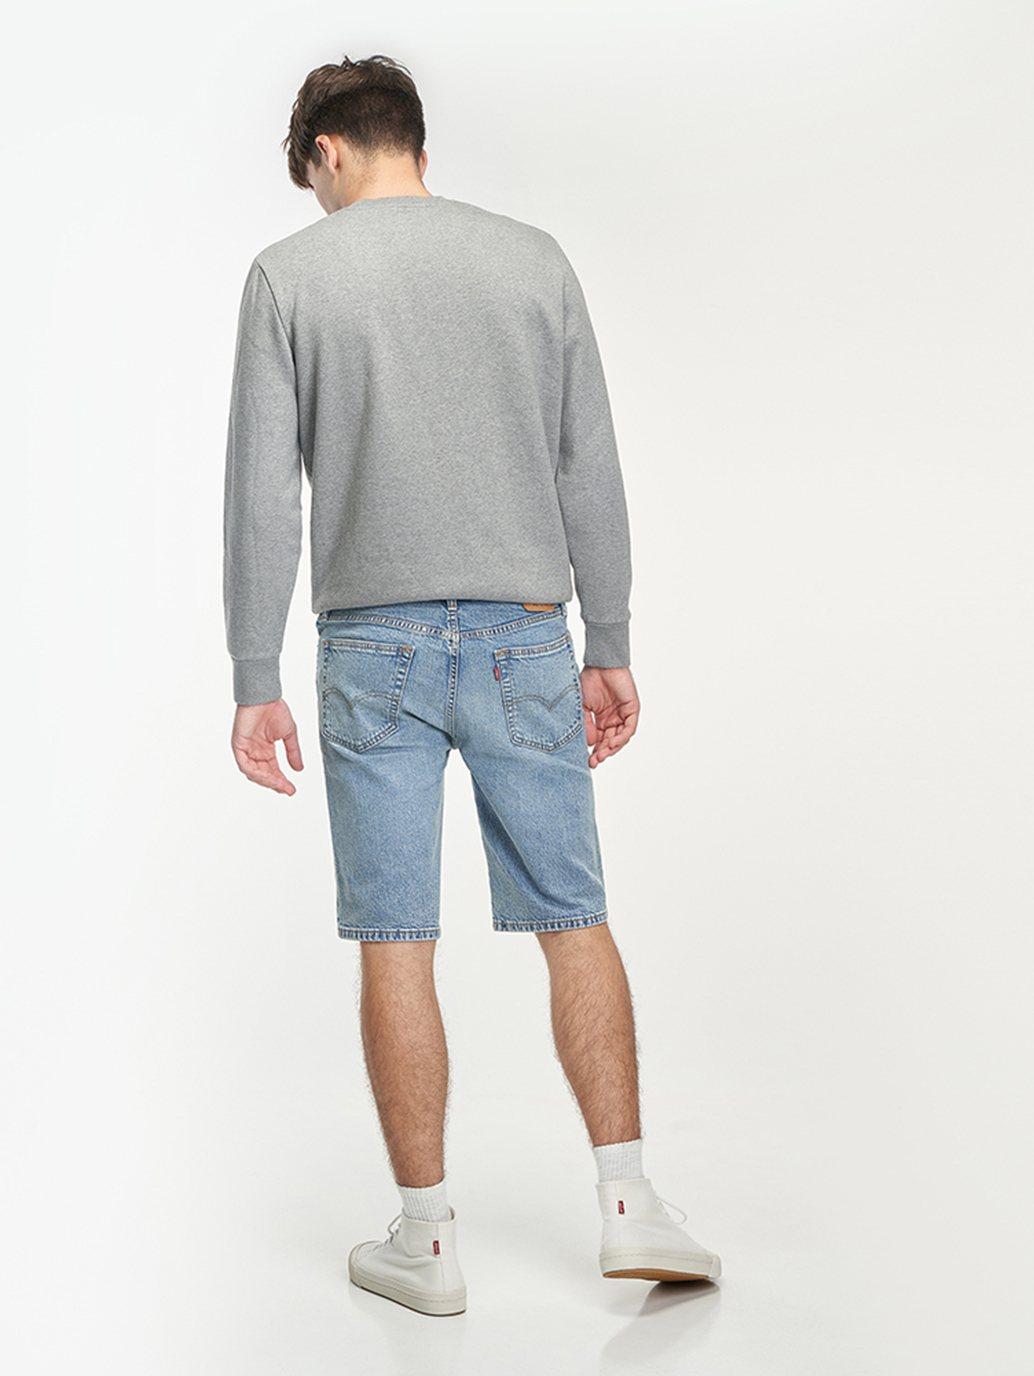 levis singapore mens standard jean shorts 398640058 02 Back